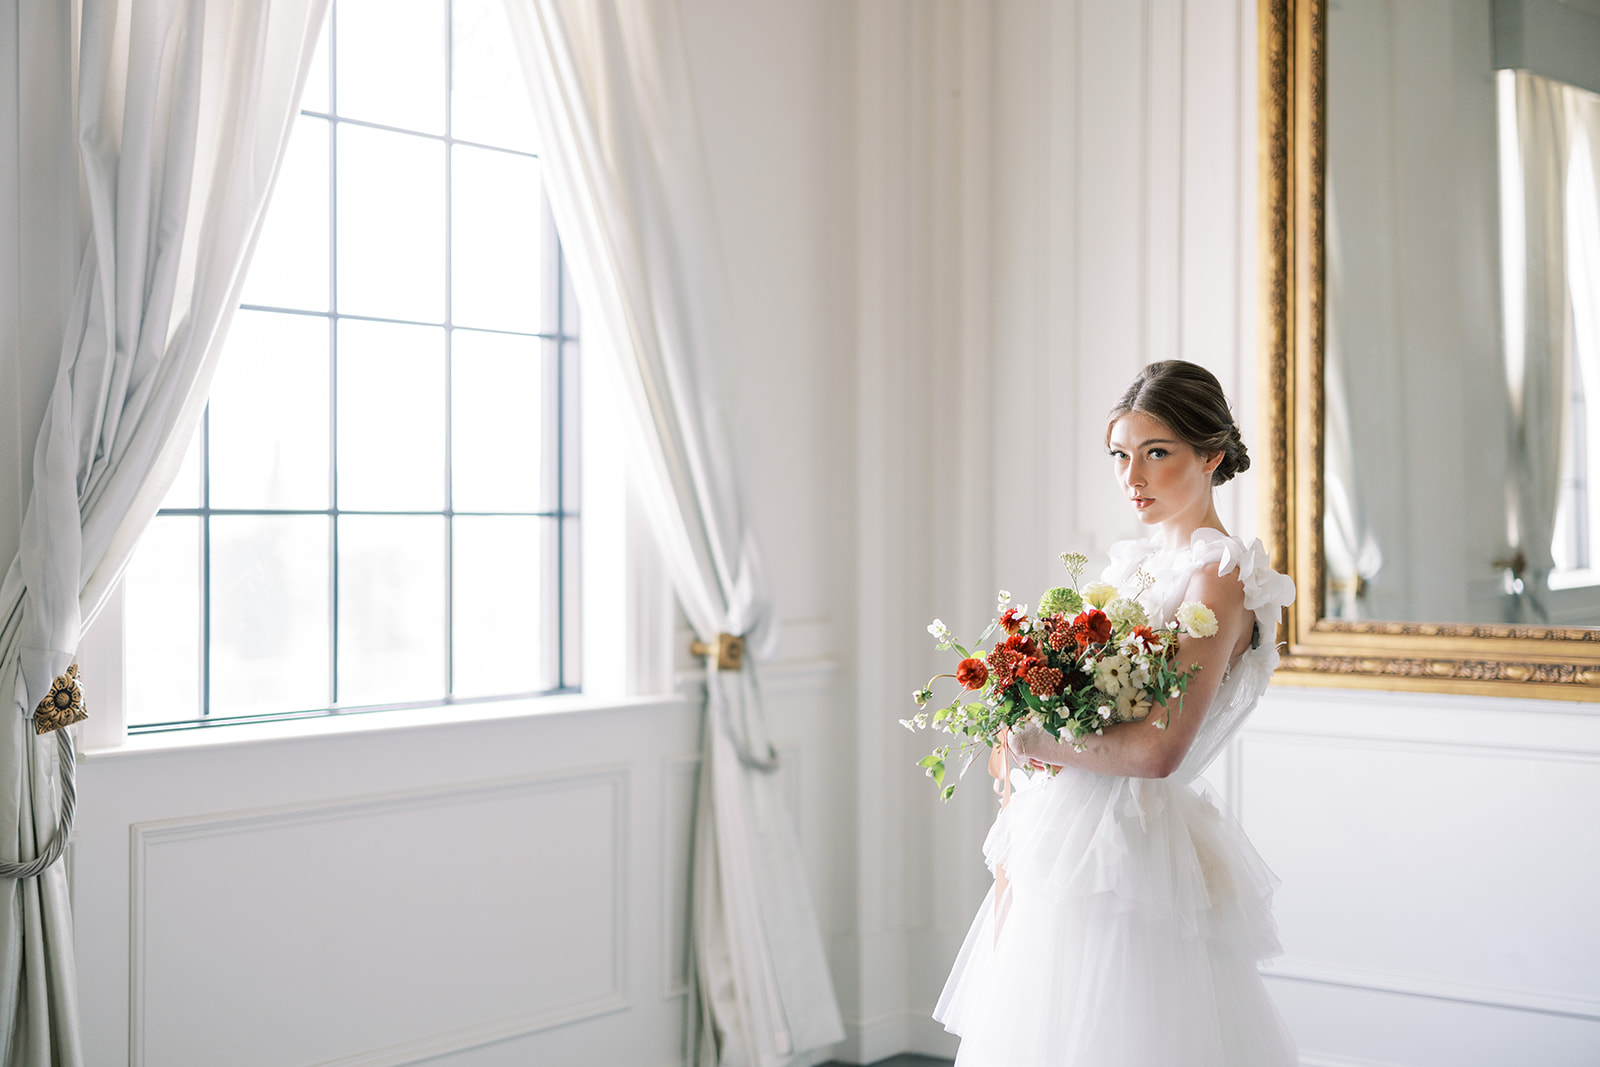 Beautiful bride holding flowers